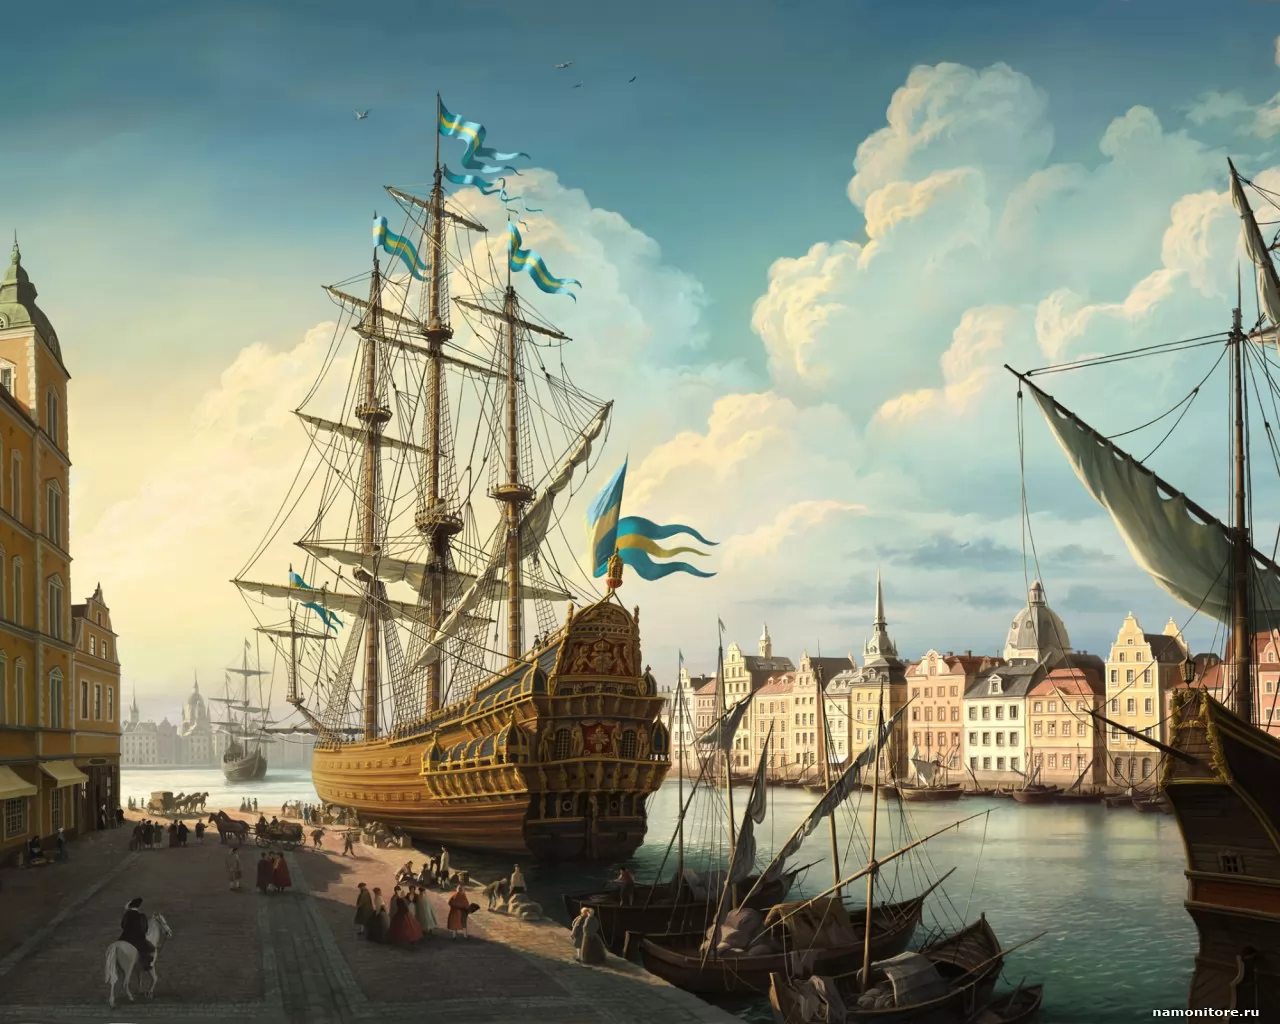 Шведский фрегат XVIII века у пристани, города и страны, Европа, лучшее, парусник, рисованное, фрегат х